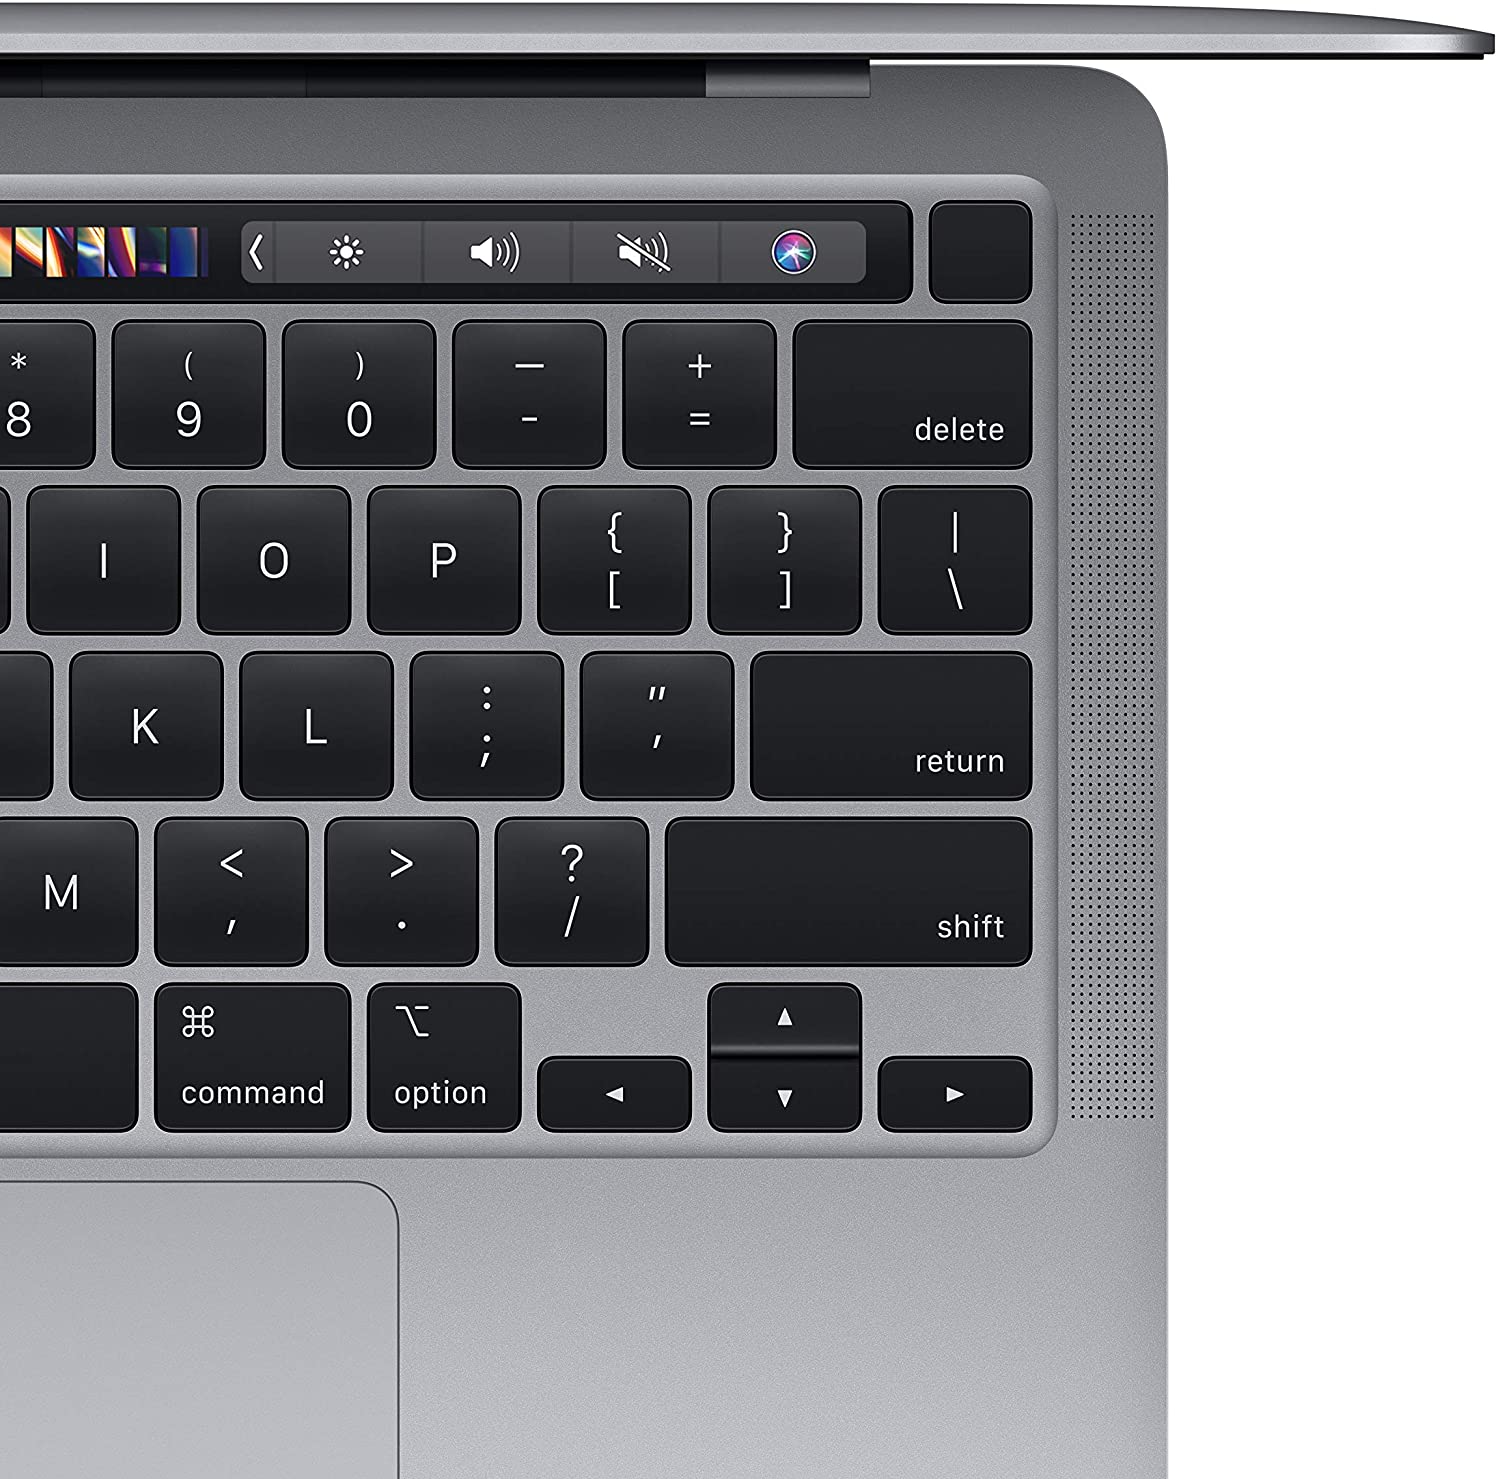 Apple MacBook Pro with Apple M1 Chip 13-inch 8GB RAM 256GB SSD Storage (2020 Model)